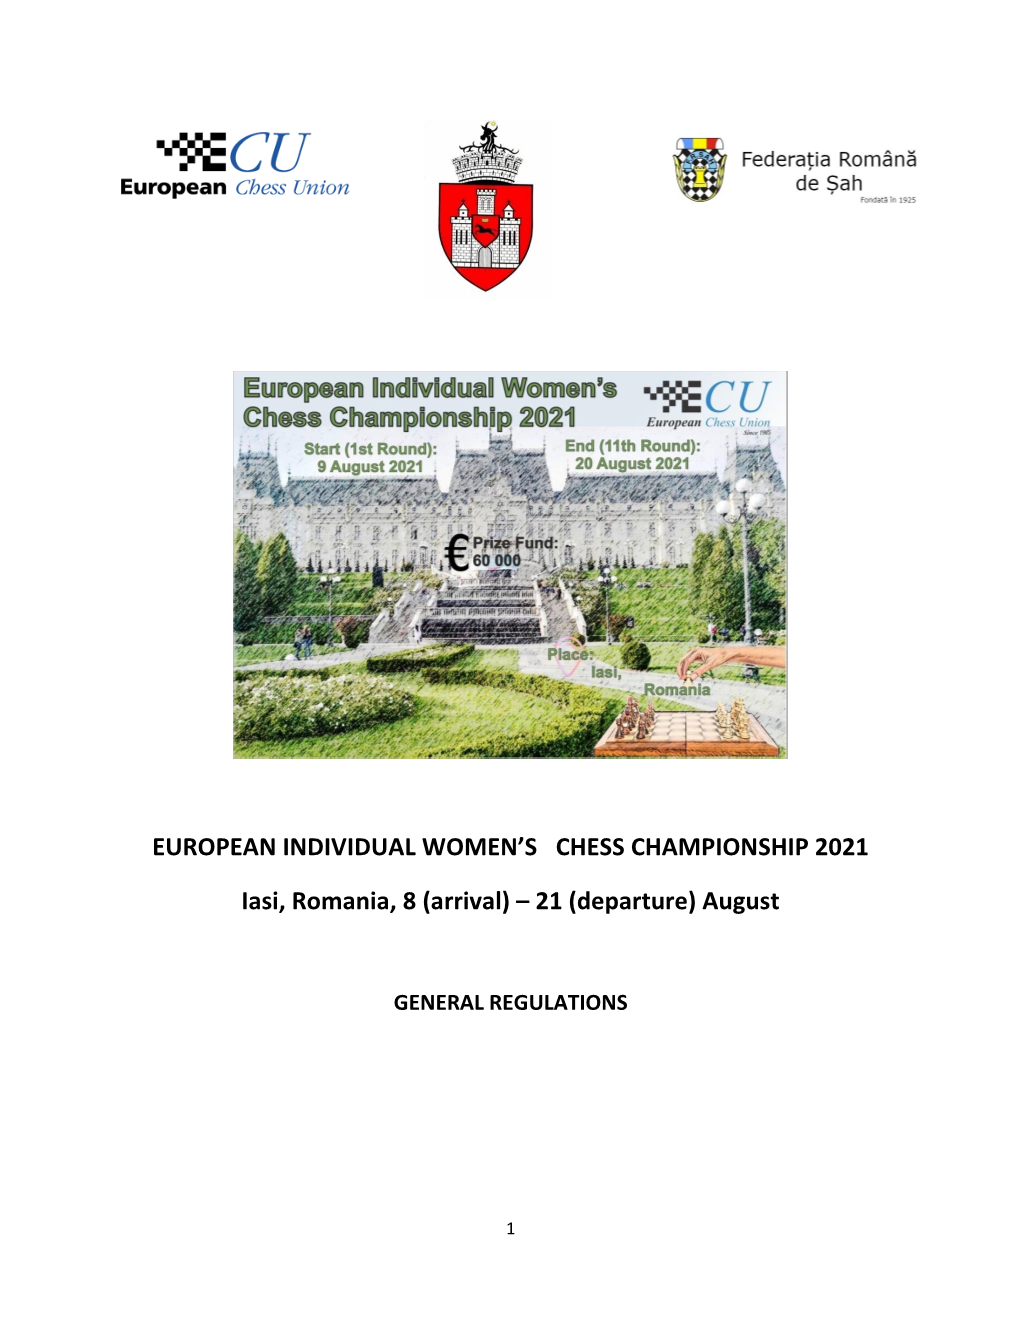 EUROPEAN INDIVIDUAL WOMEN's CHESS CHAMPIONSHIP 2021 Iasi, Romania, 8 (Arrival) – 21 (Departure) August